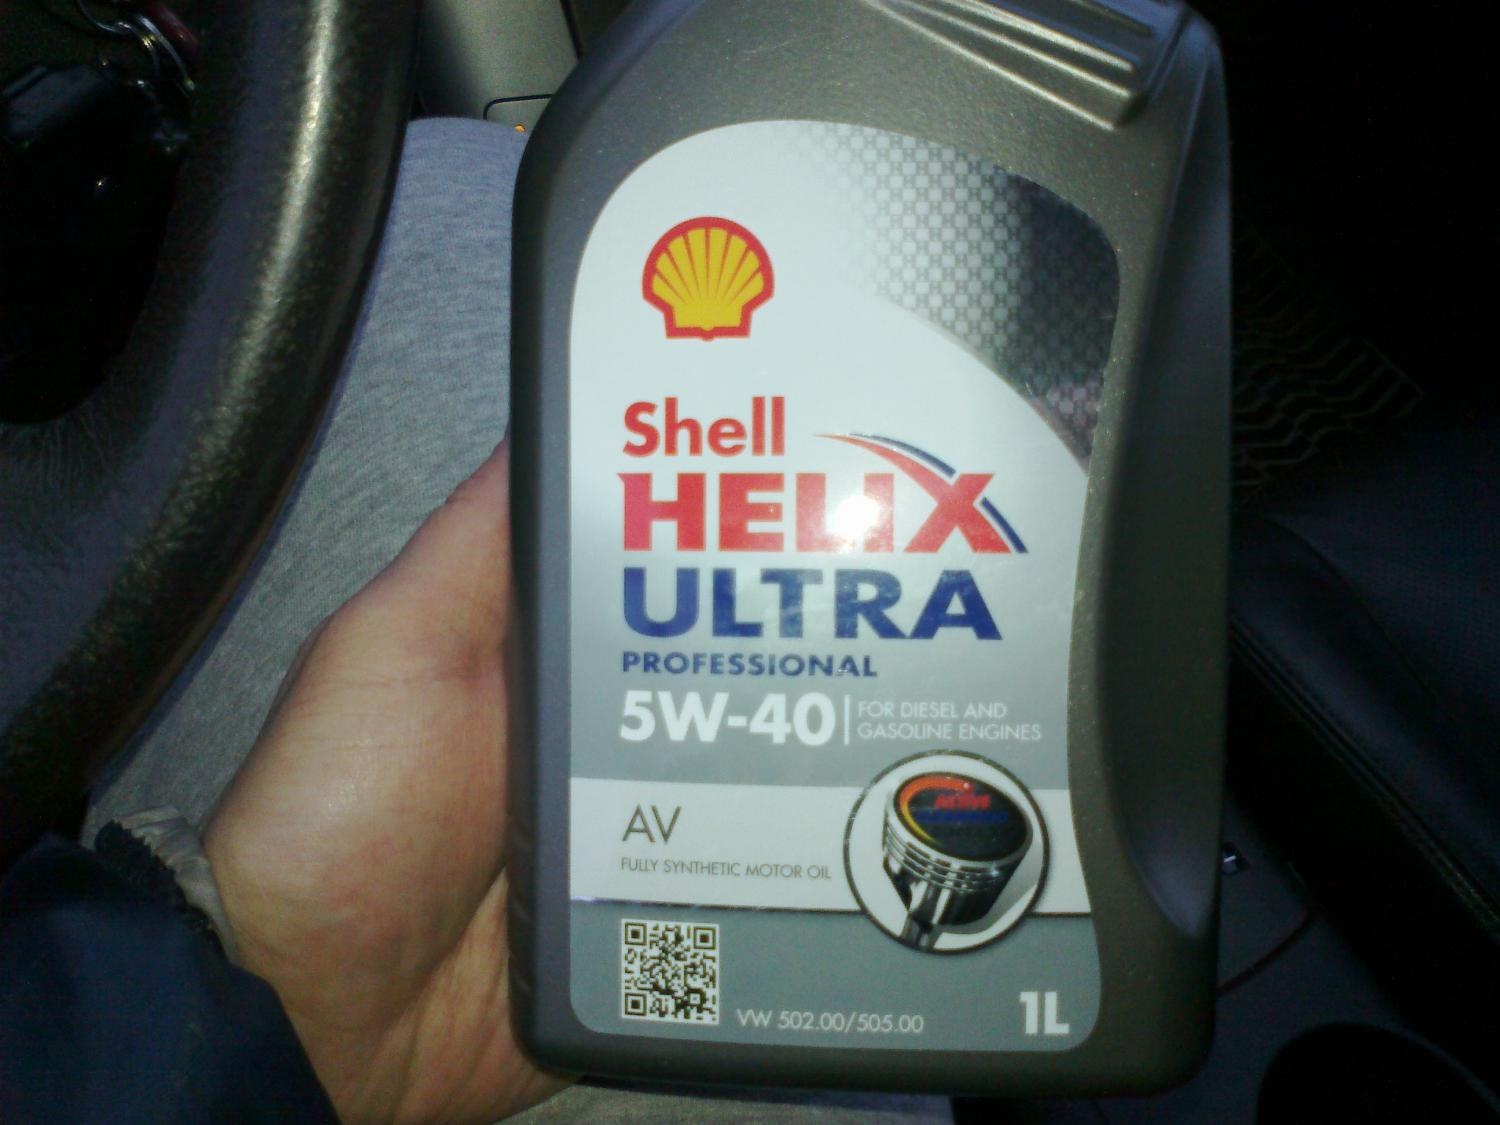 Shell av. Шелл Хеликс ультра профессионал 5w40. Shell av 5w40. Shell Helix Ultra professional av 5w-40. Shell Helix 5w30 Geely.